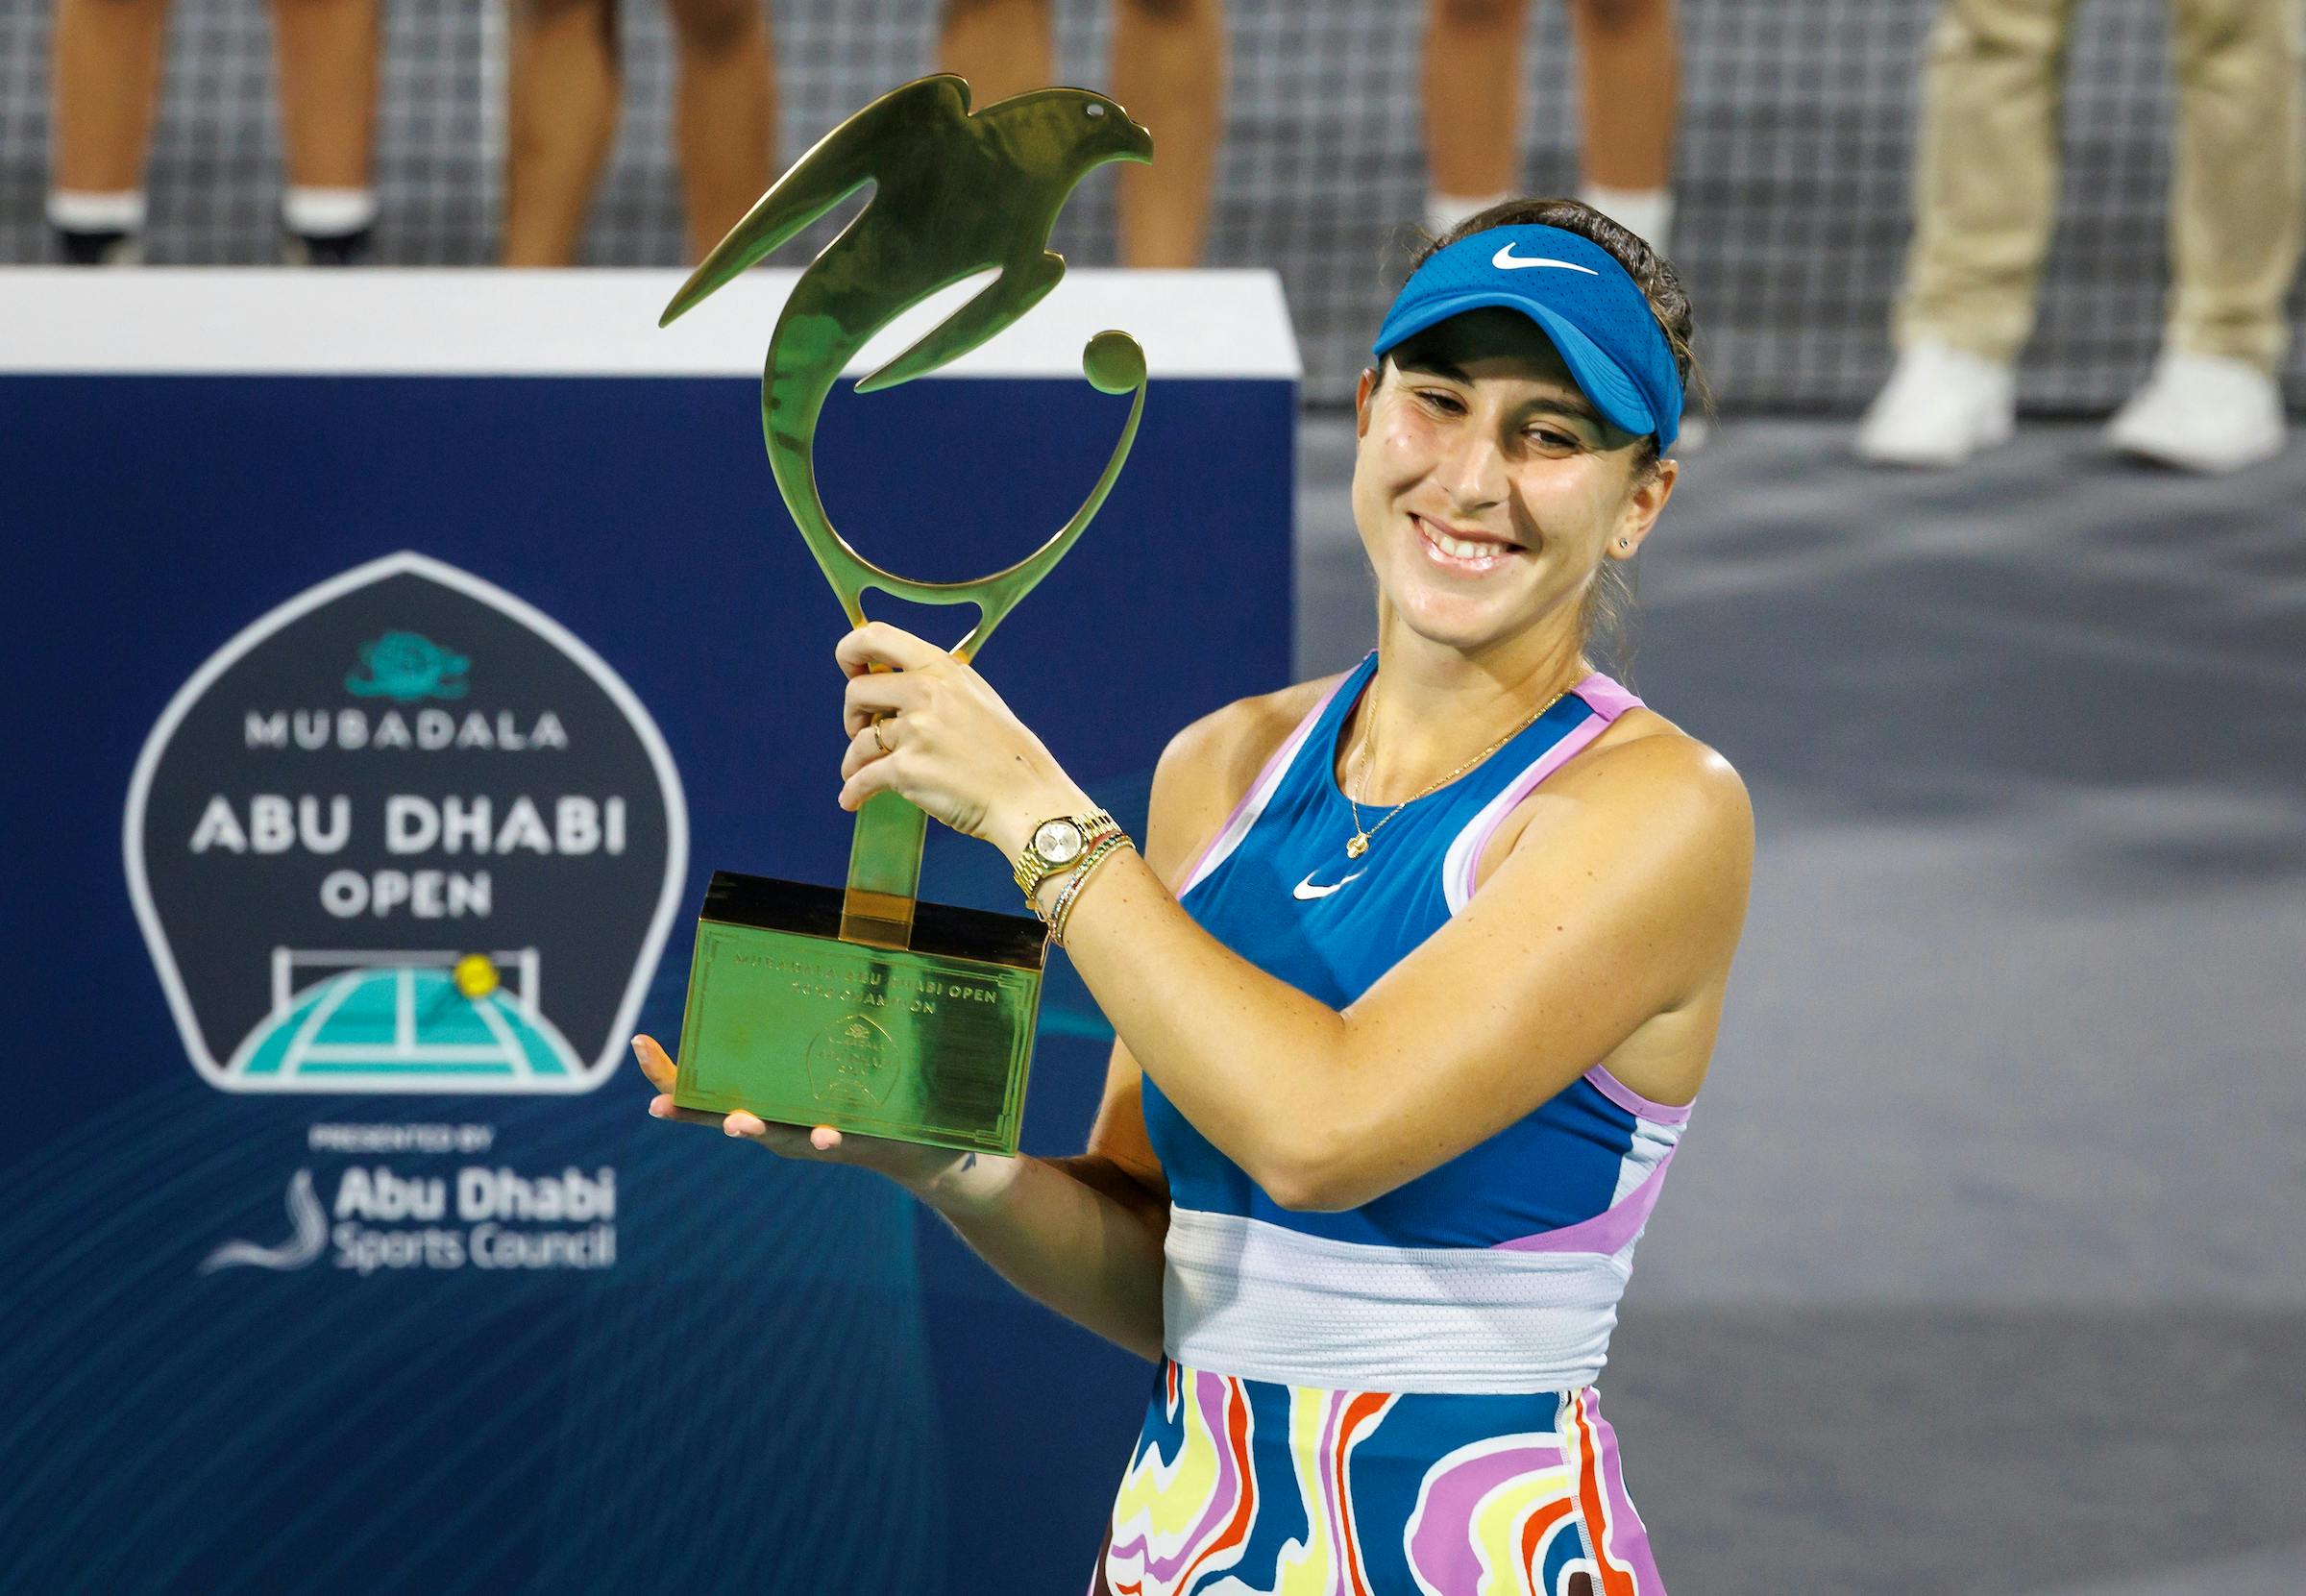 11313756 - Dubai Tennis WTA ChampionshipsSearch